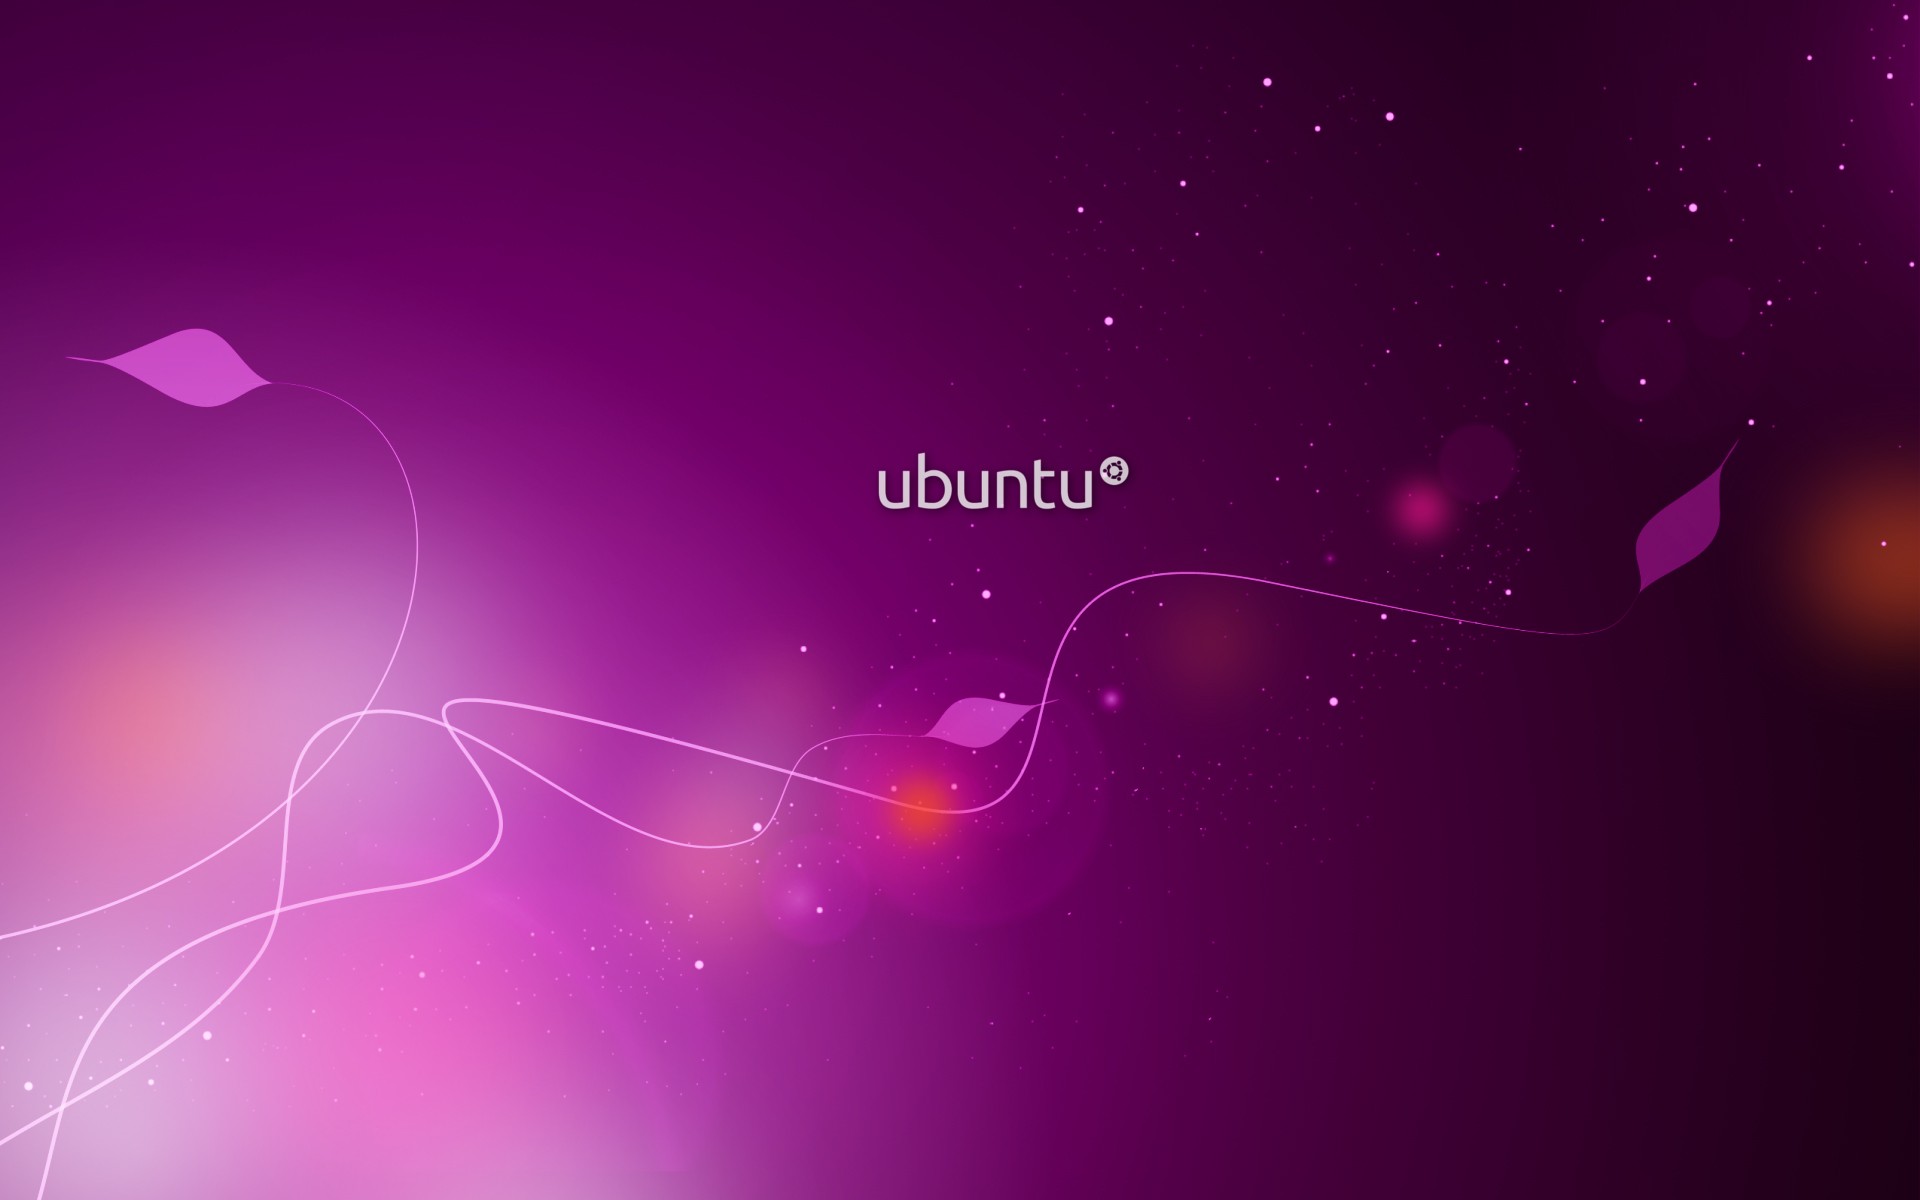 ubuntu os hd desktop backgrounds - Free hd wallpapers